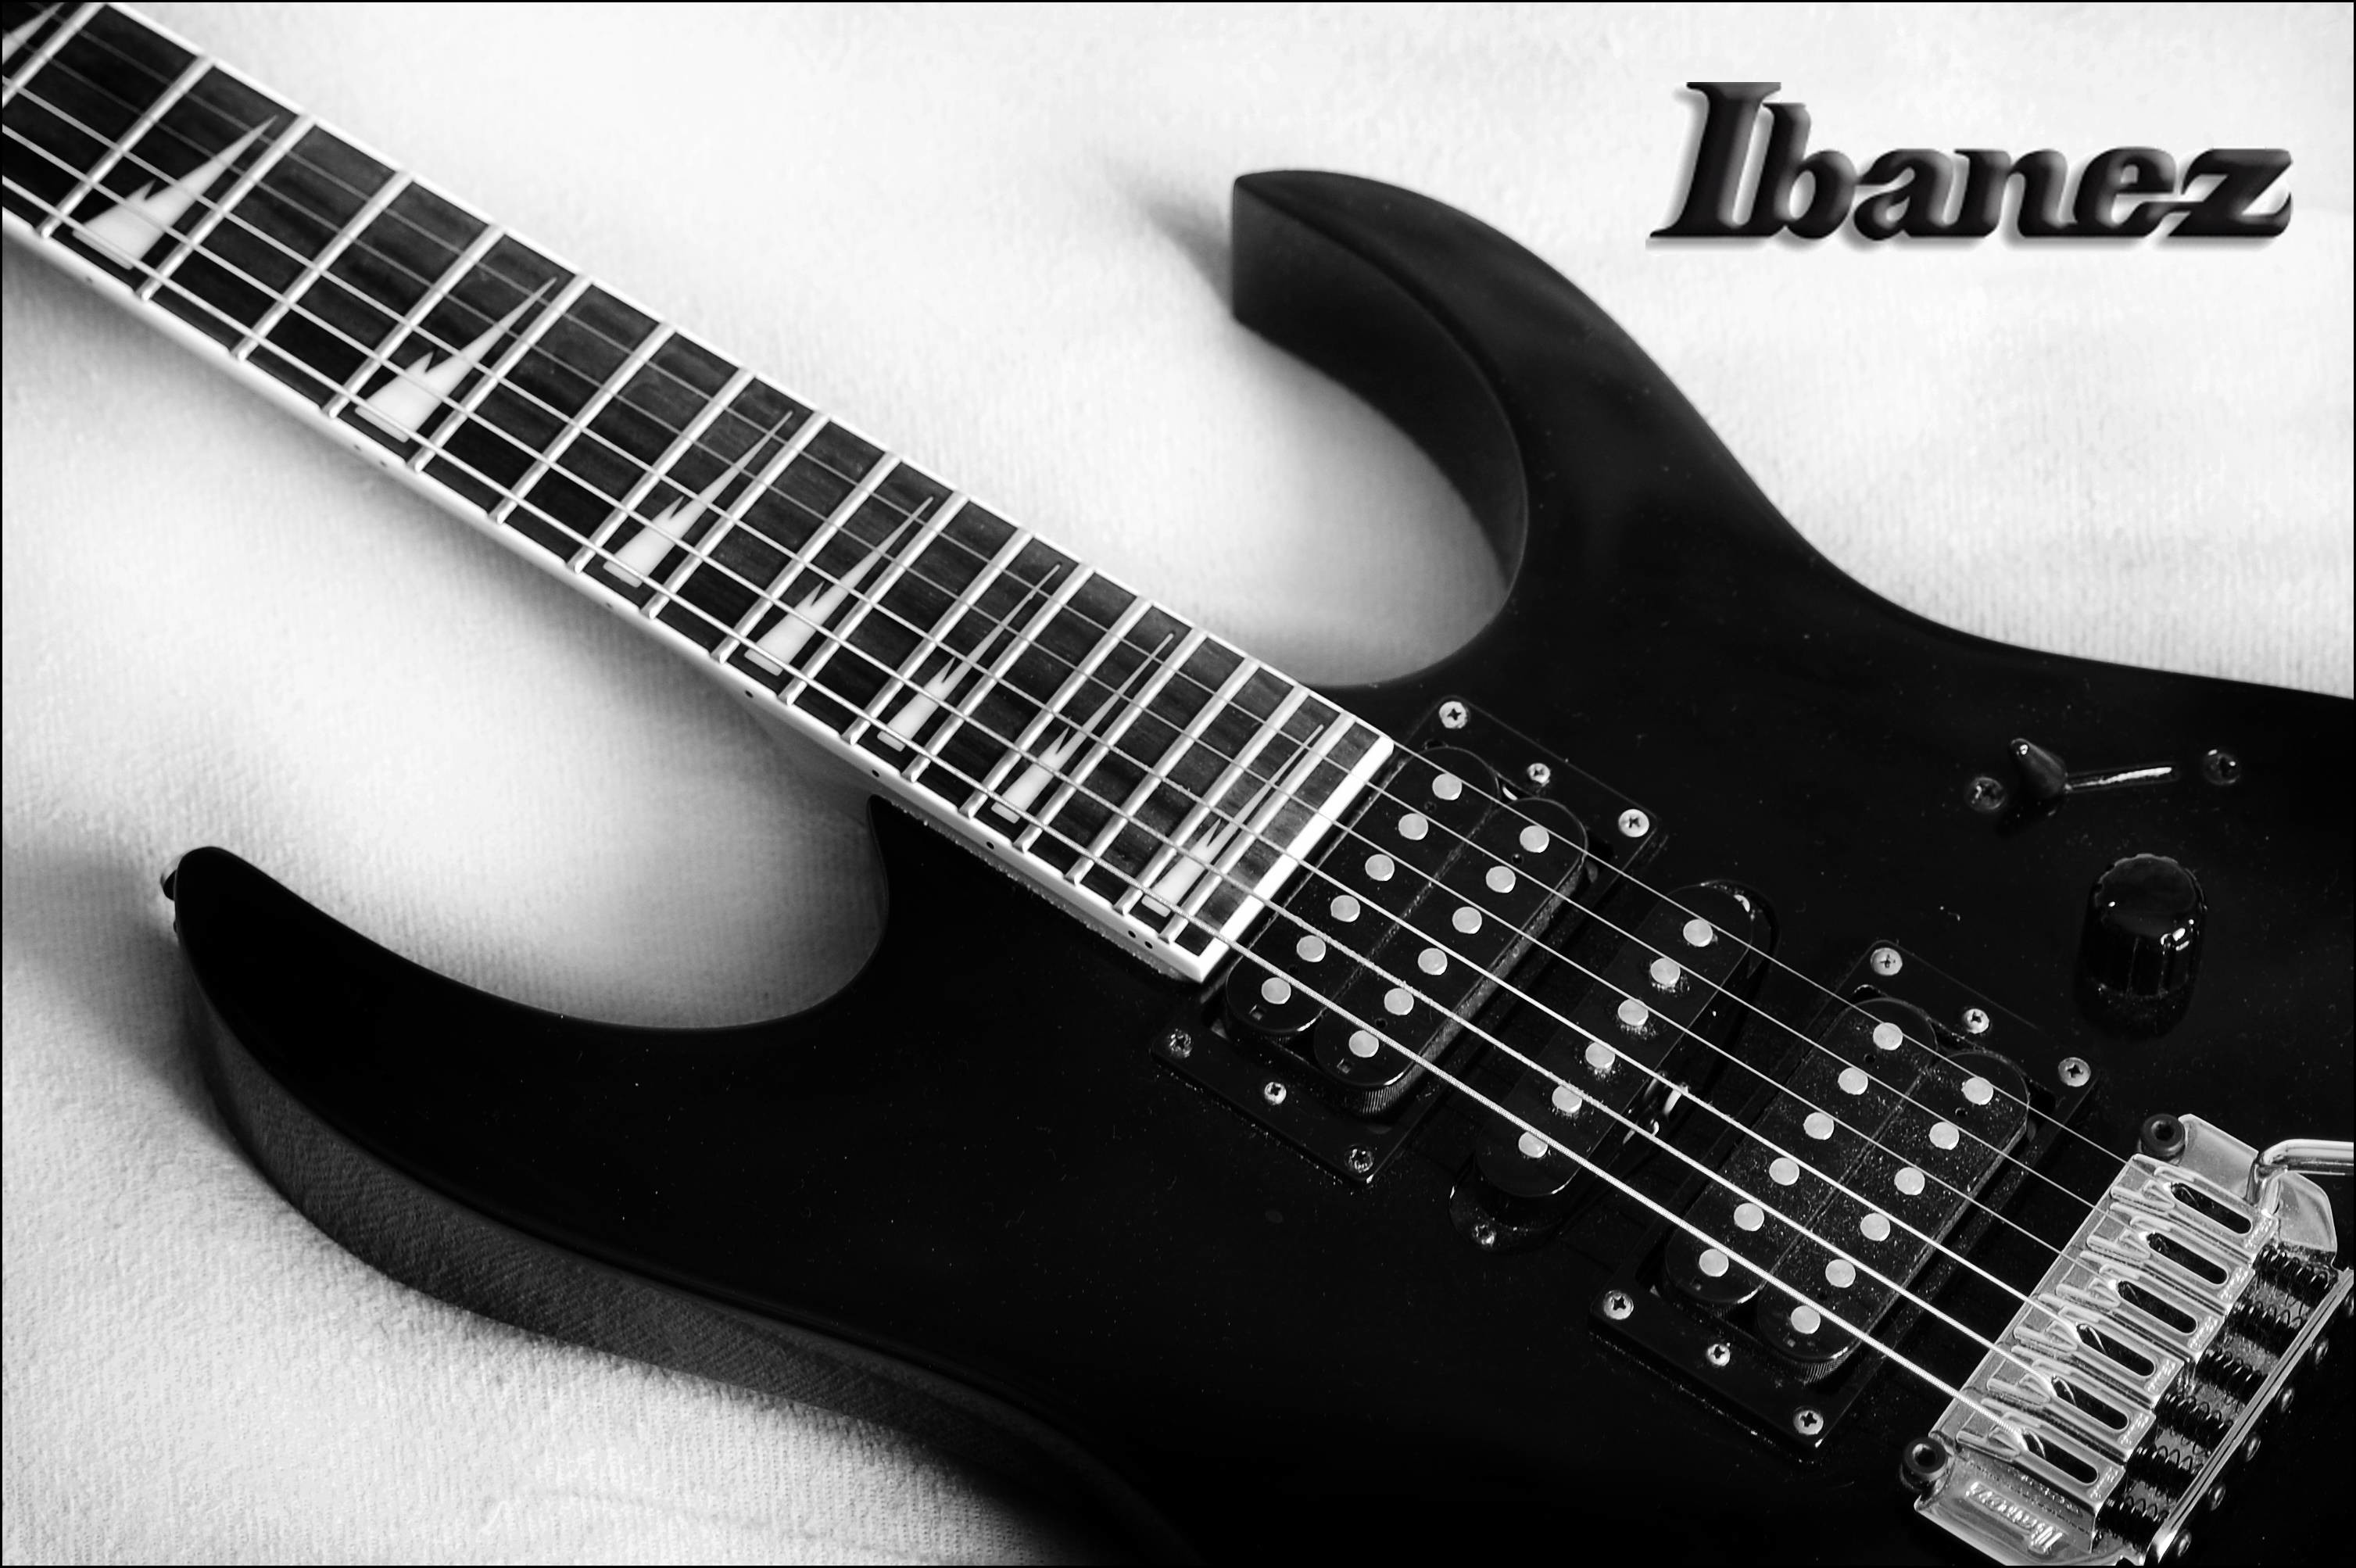 sfondi per chitarra hd 1920x1080,chitarra,strumento musicale,chitarra elettrica,strumenti a corda pizzicati,basso